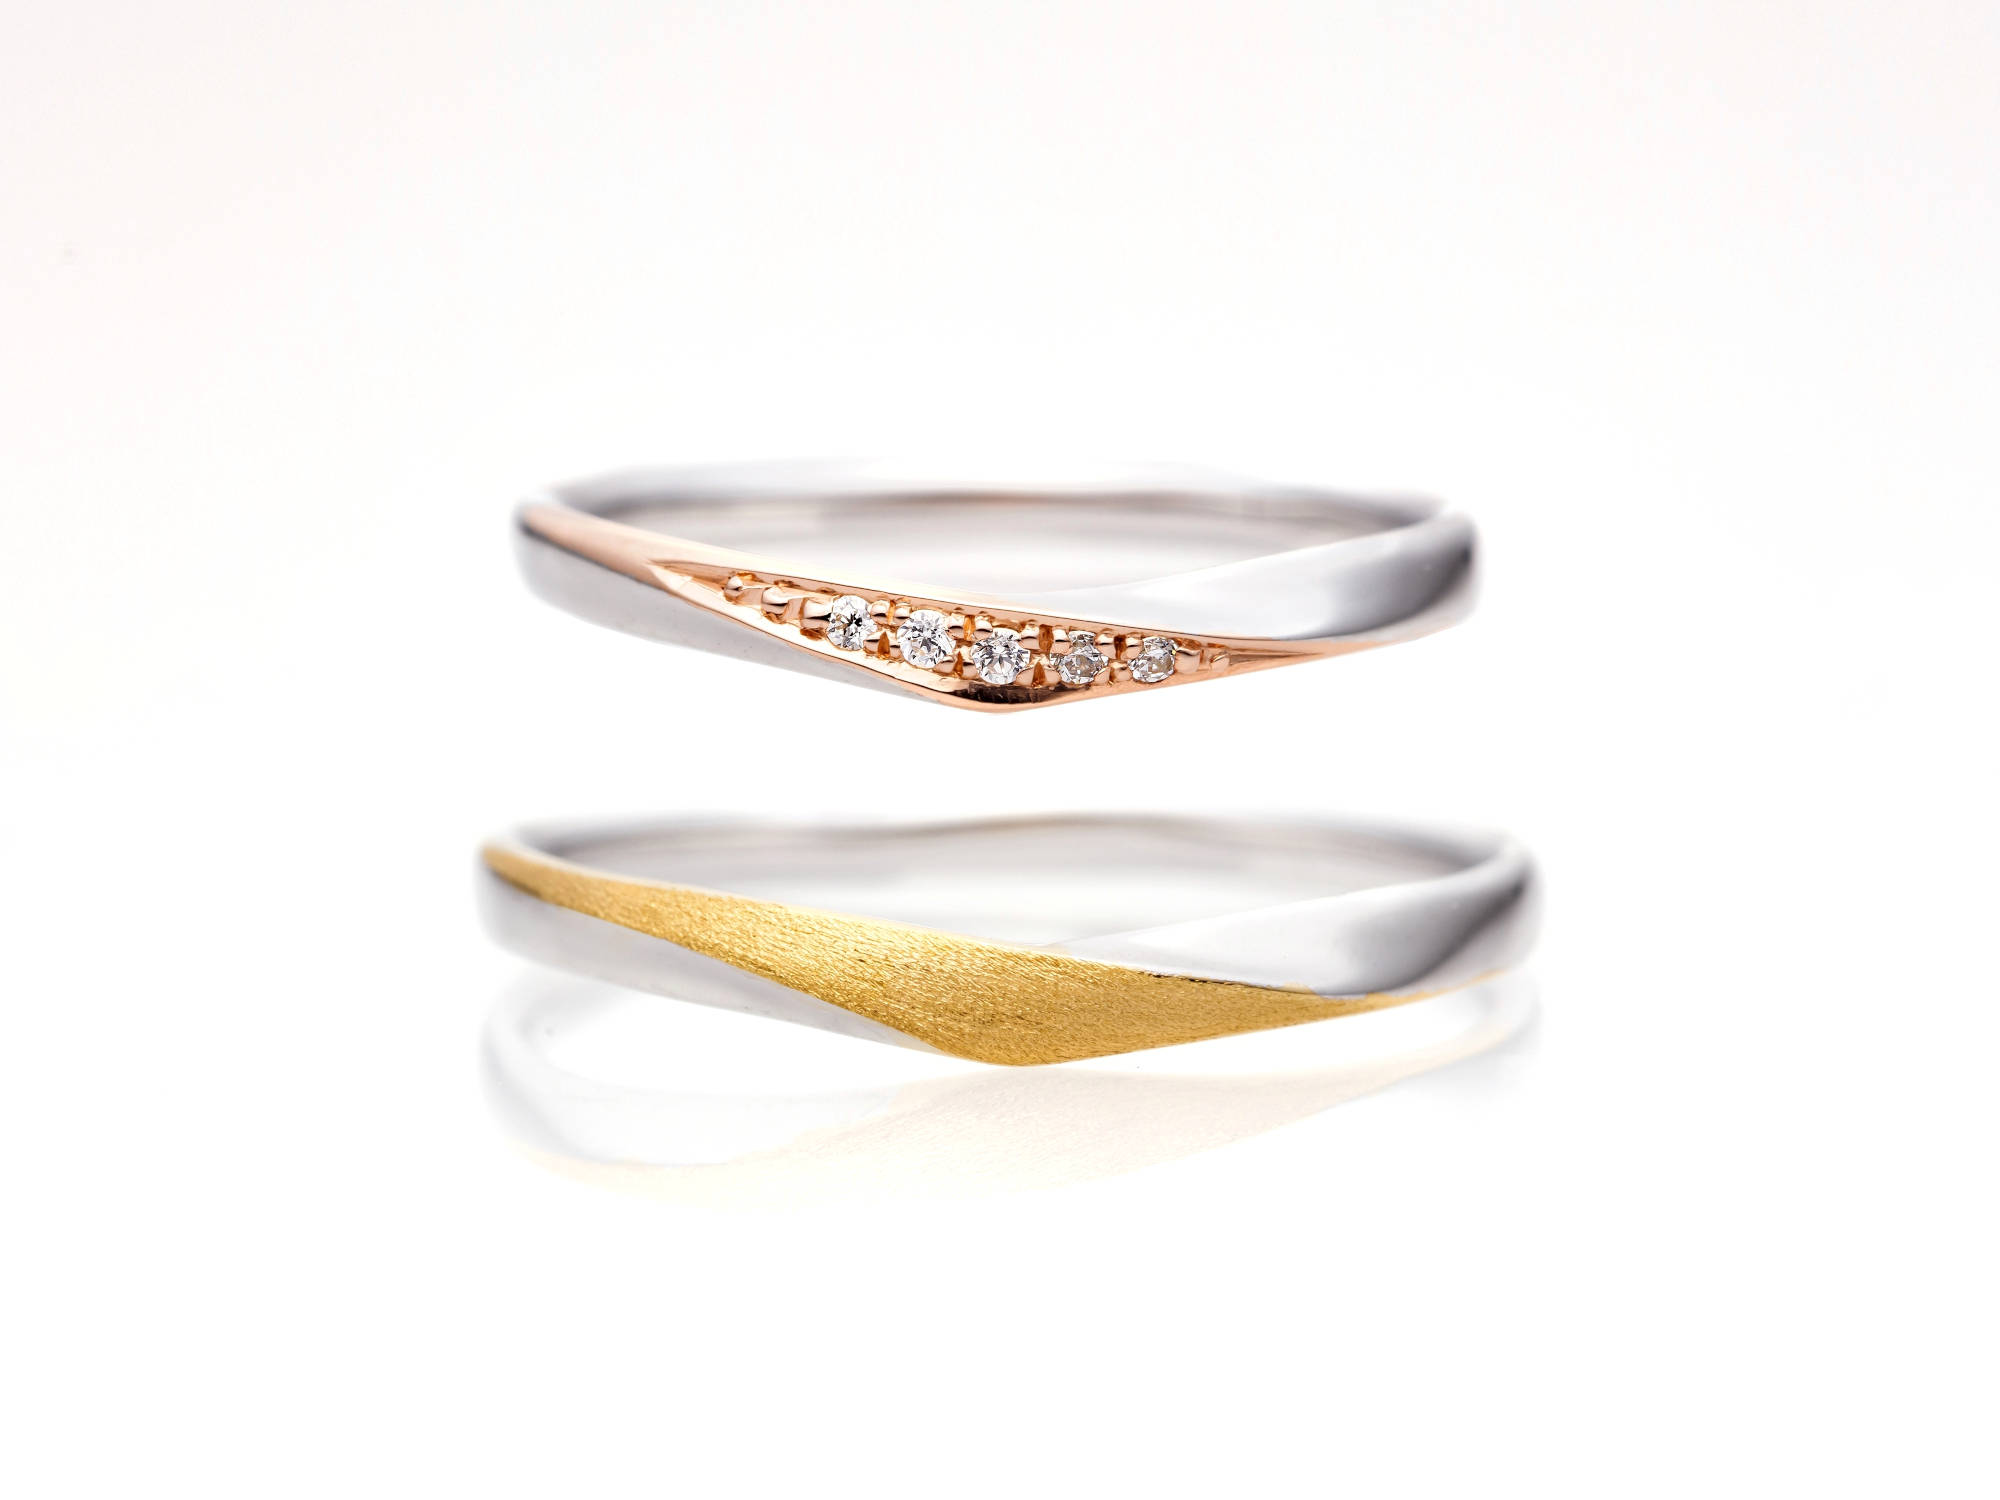 Sainte Couture 結婚指輪コンビネーションカラー